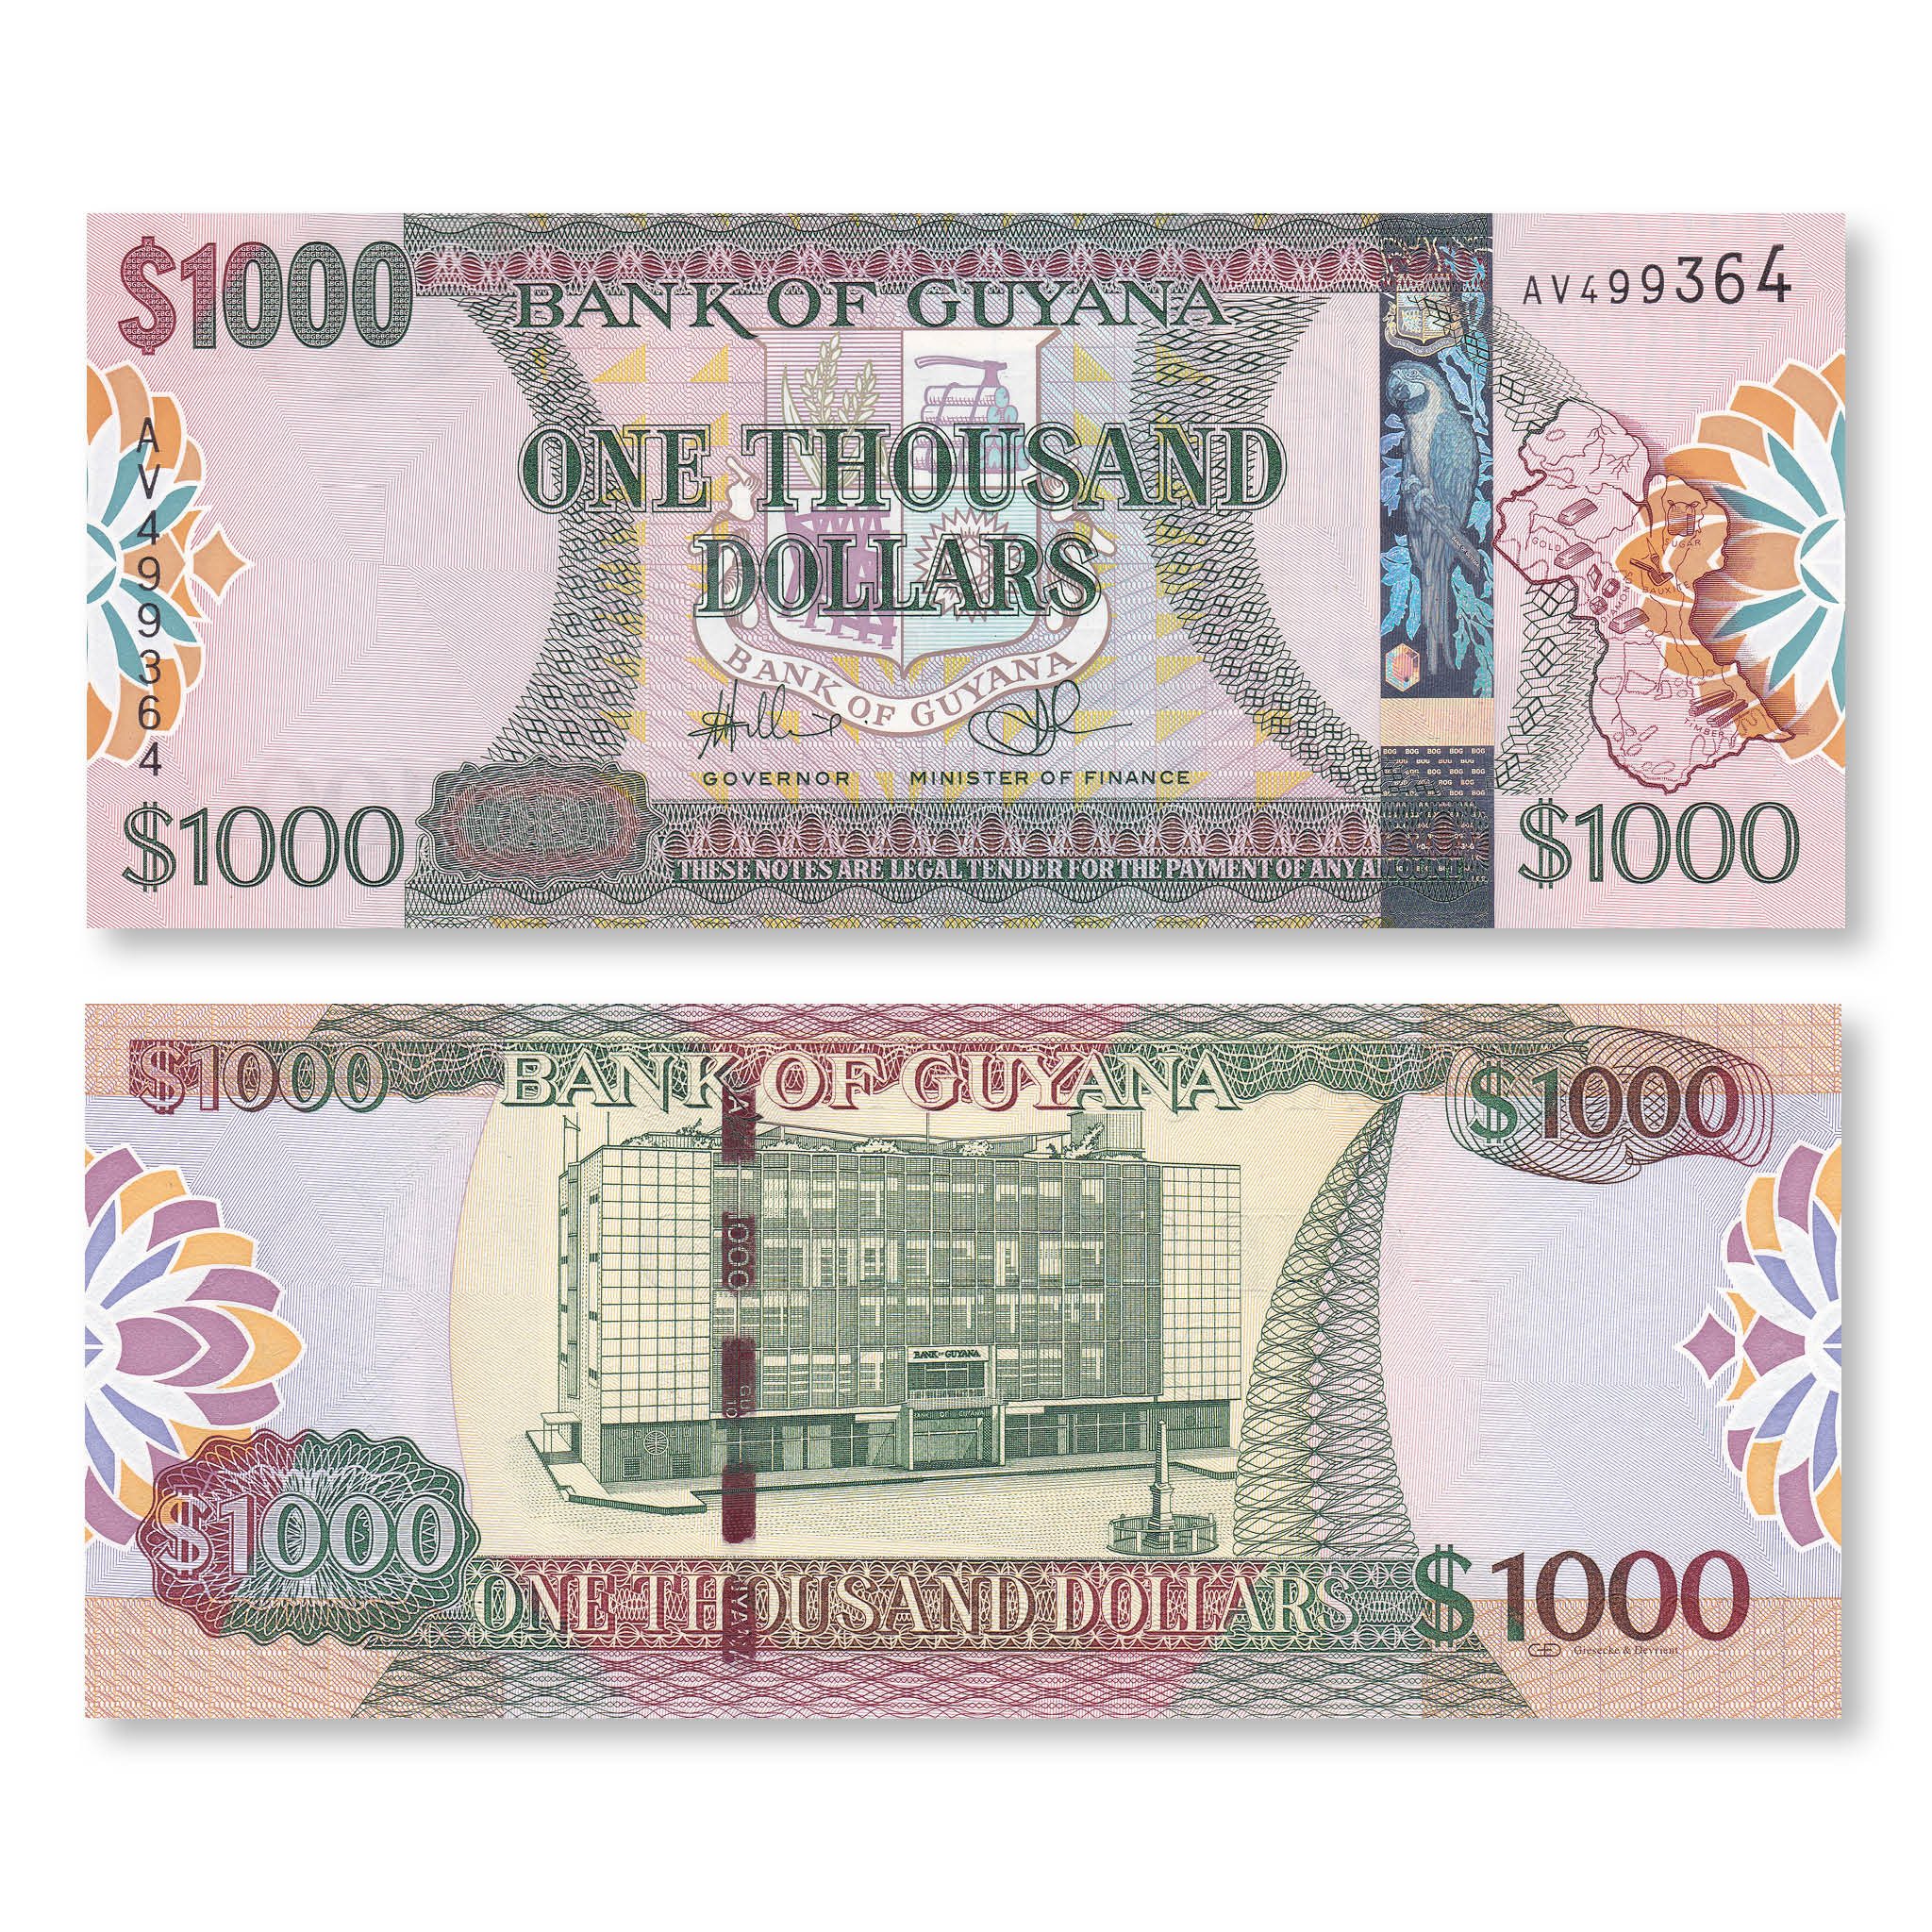 Guyana 1000 Dollars, 2011, B117a, P39b, UNC - Robert's World Money - World Banknotes